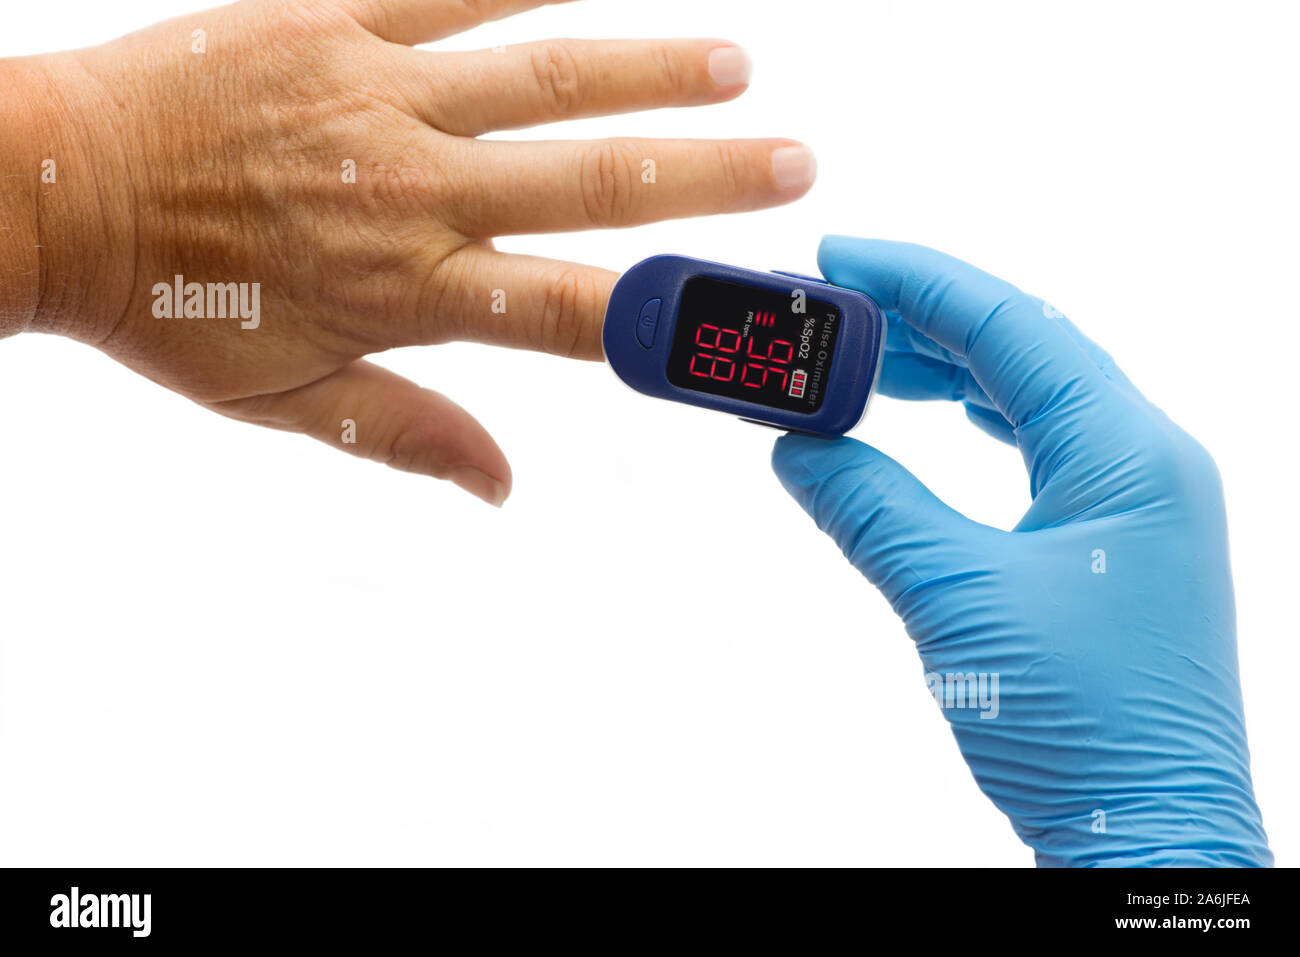 Nurse uses pulse oximeter to measure patient's blood oxygen level. Stock Photo